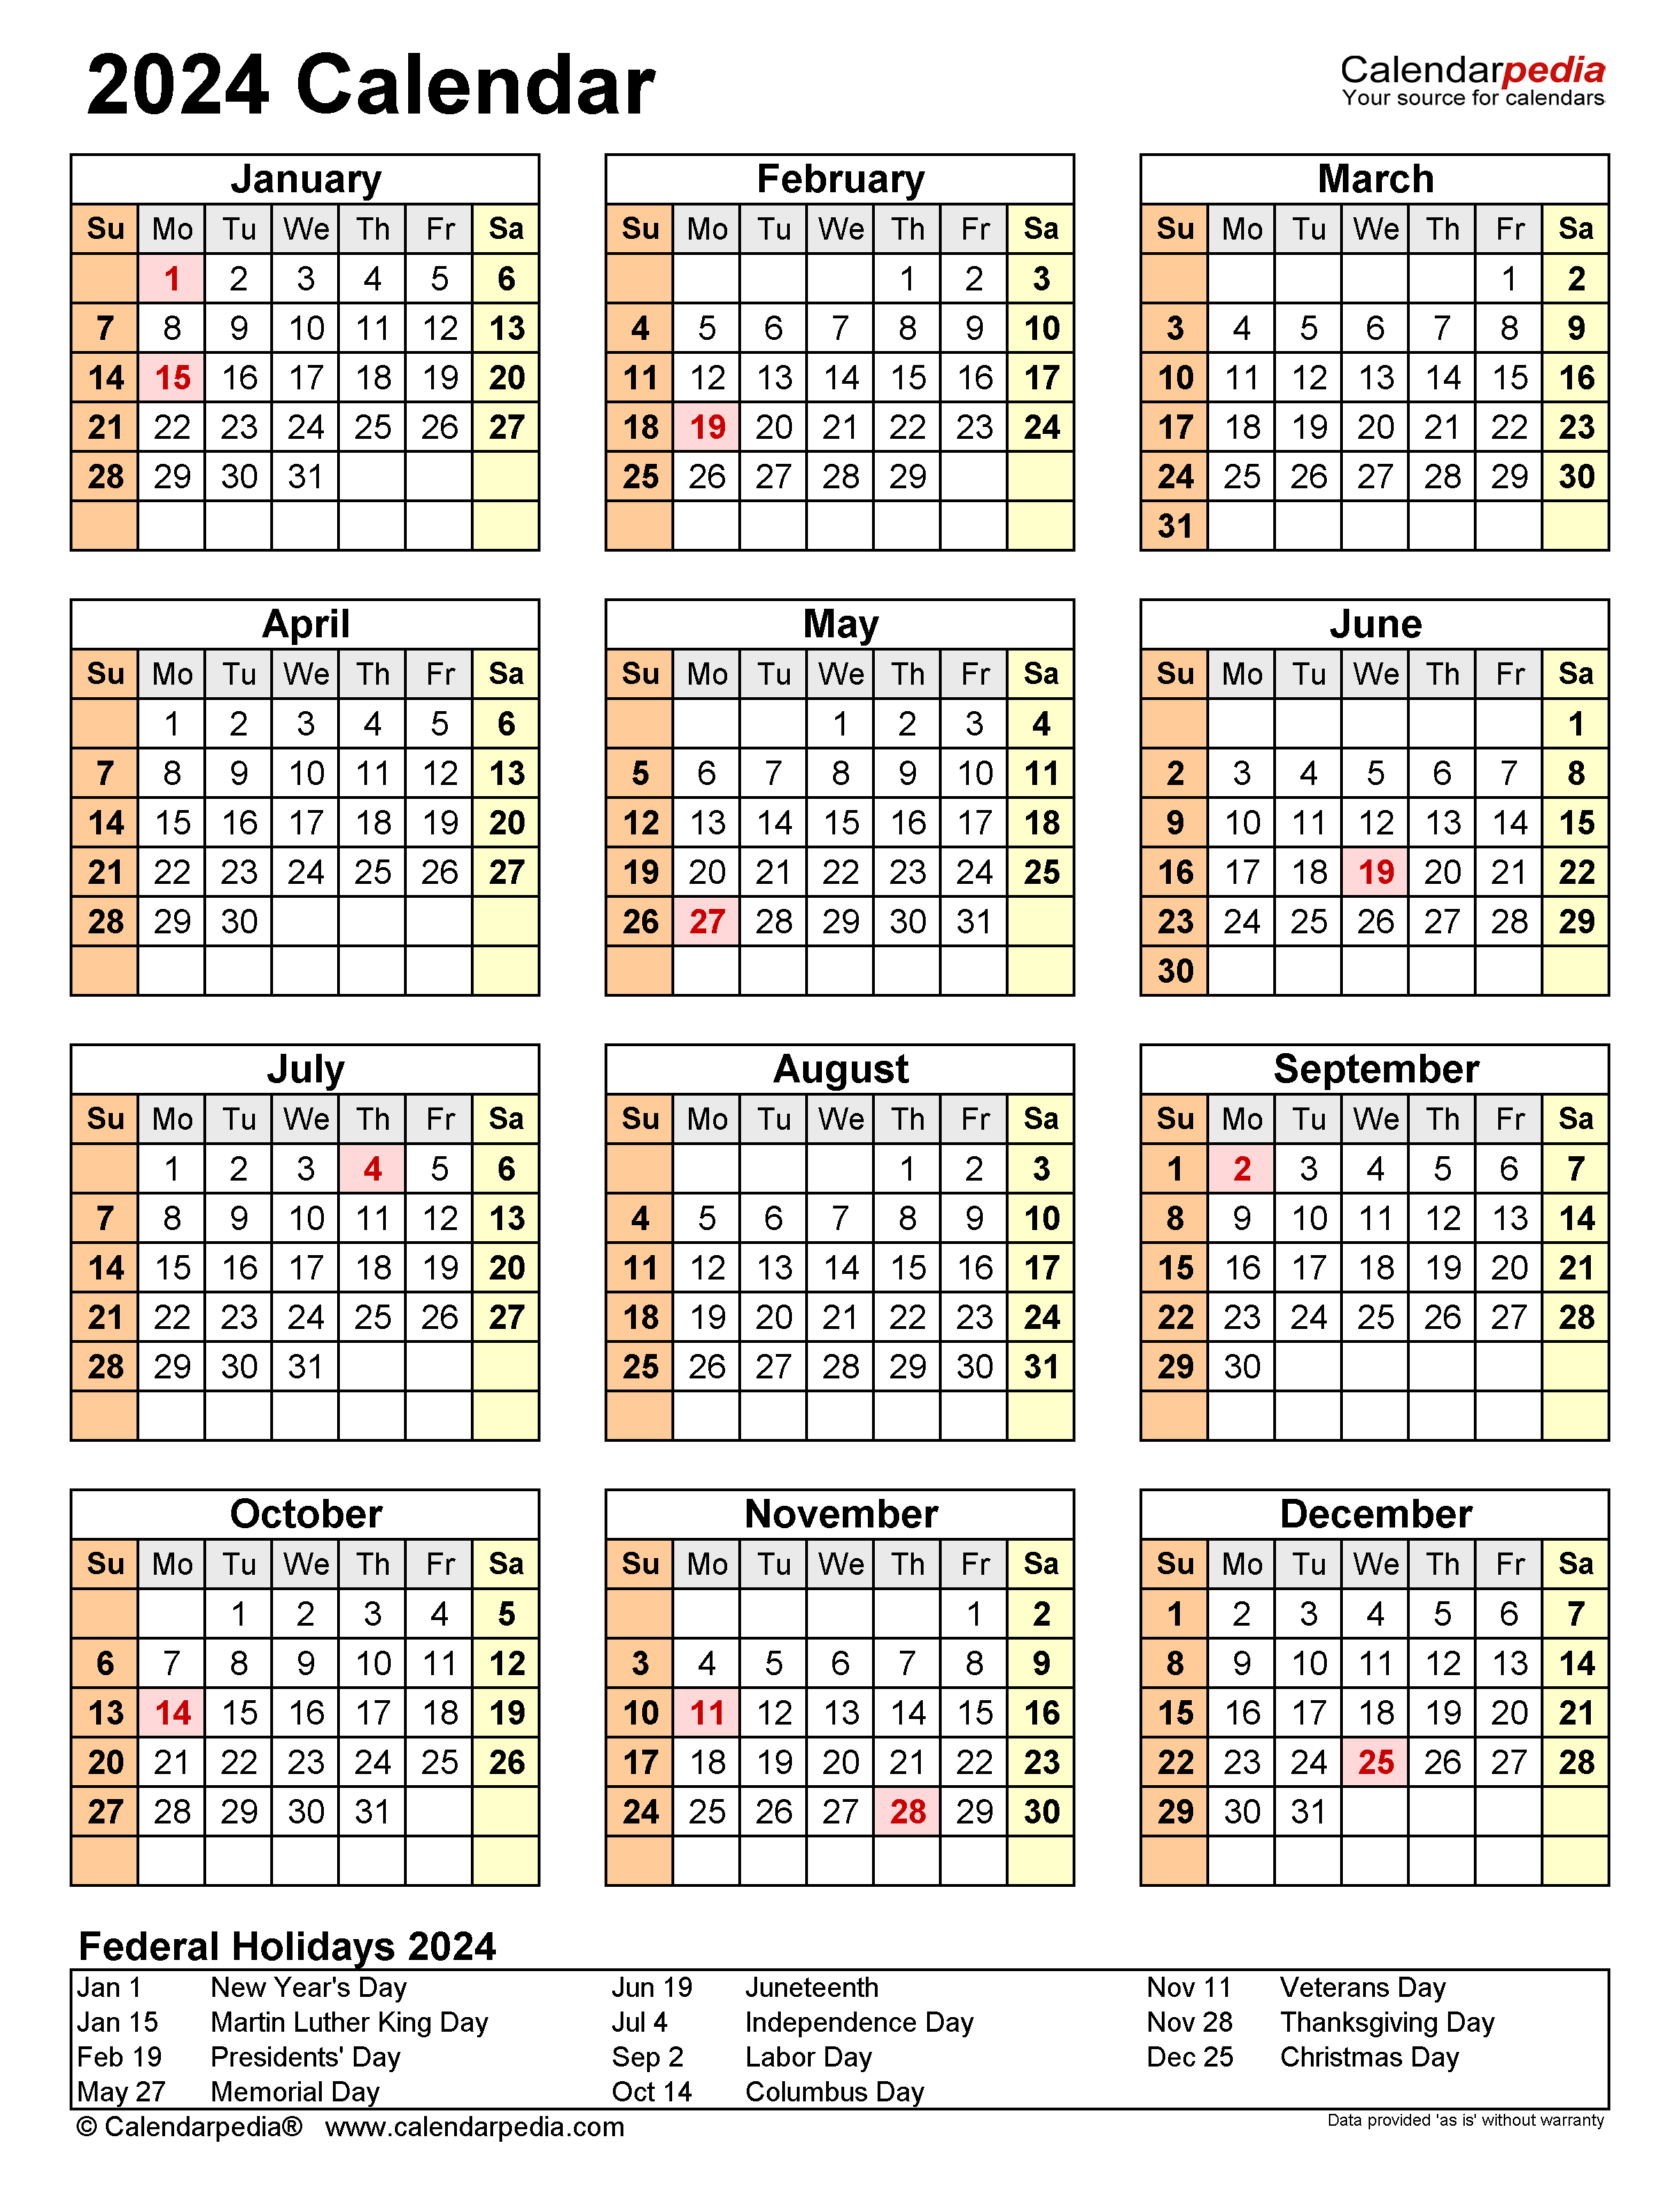 Free Printable 2024 Calendar With Holidays Crownflourmills - Free Printable 2024 Calendar With Holidays May